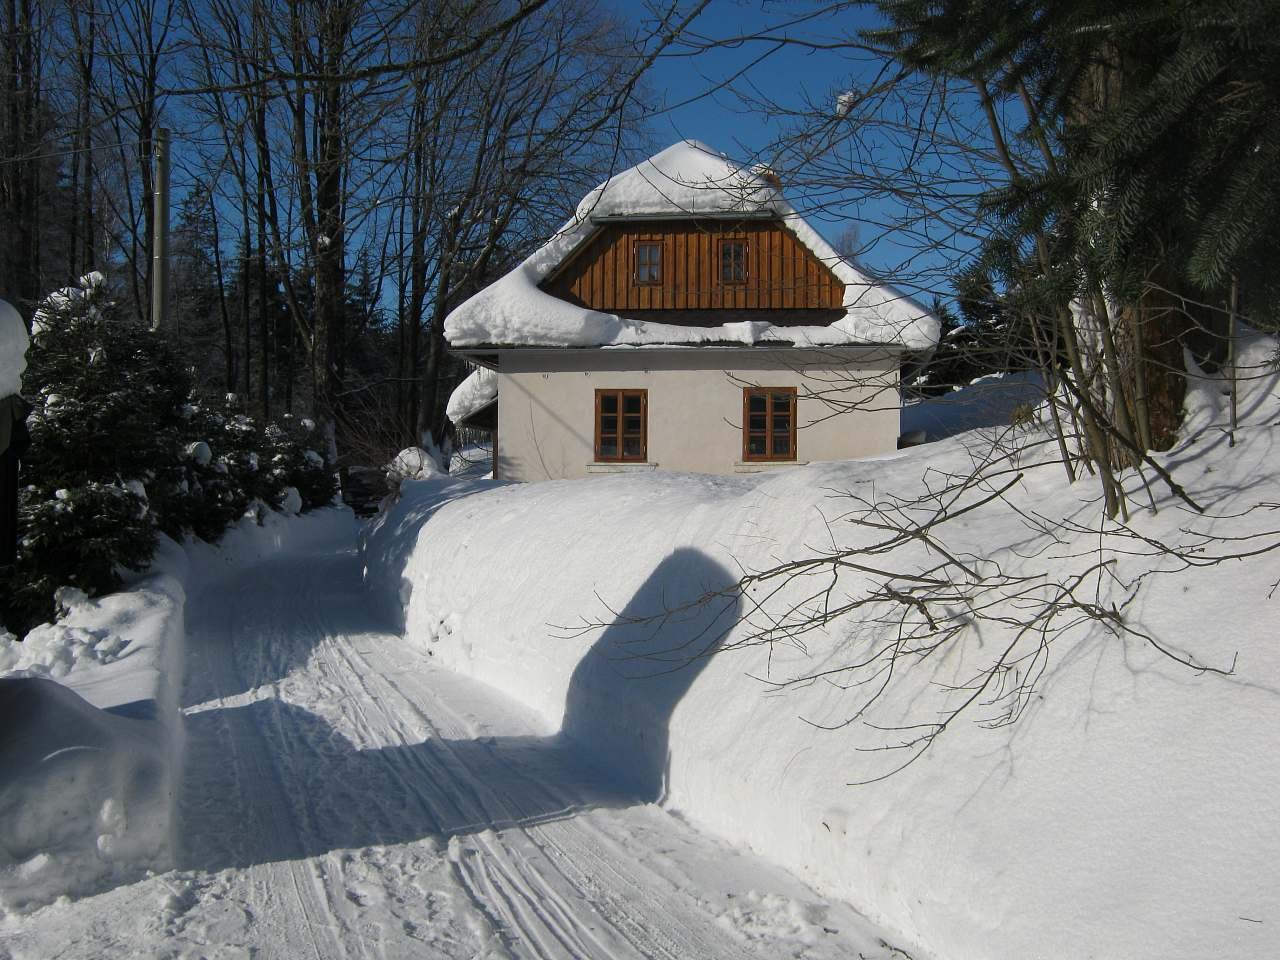 Cottage U Sluníček in winter